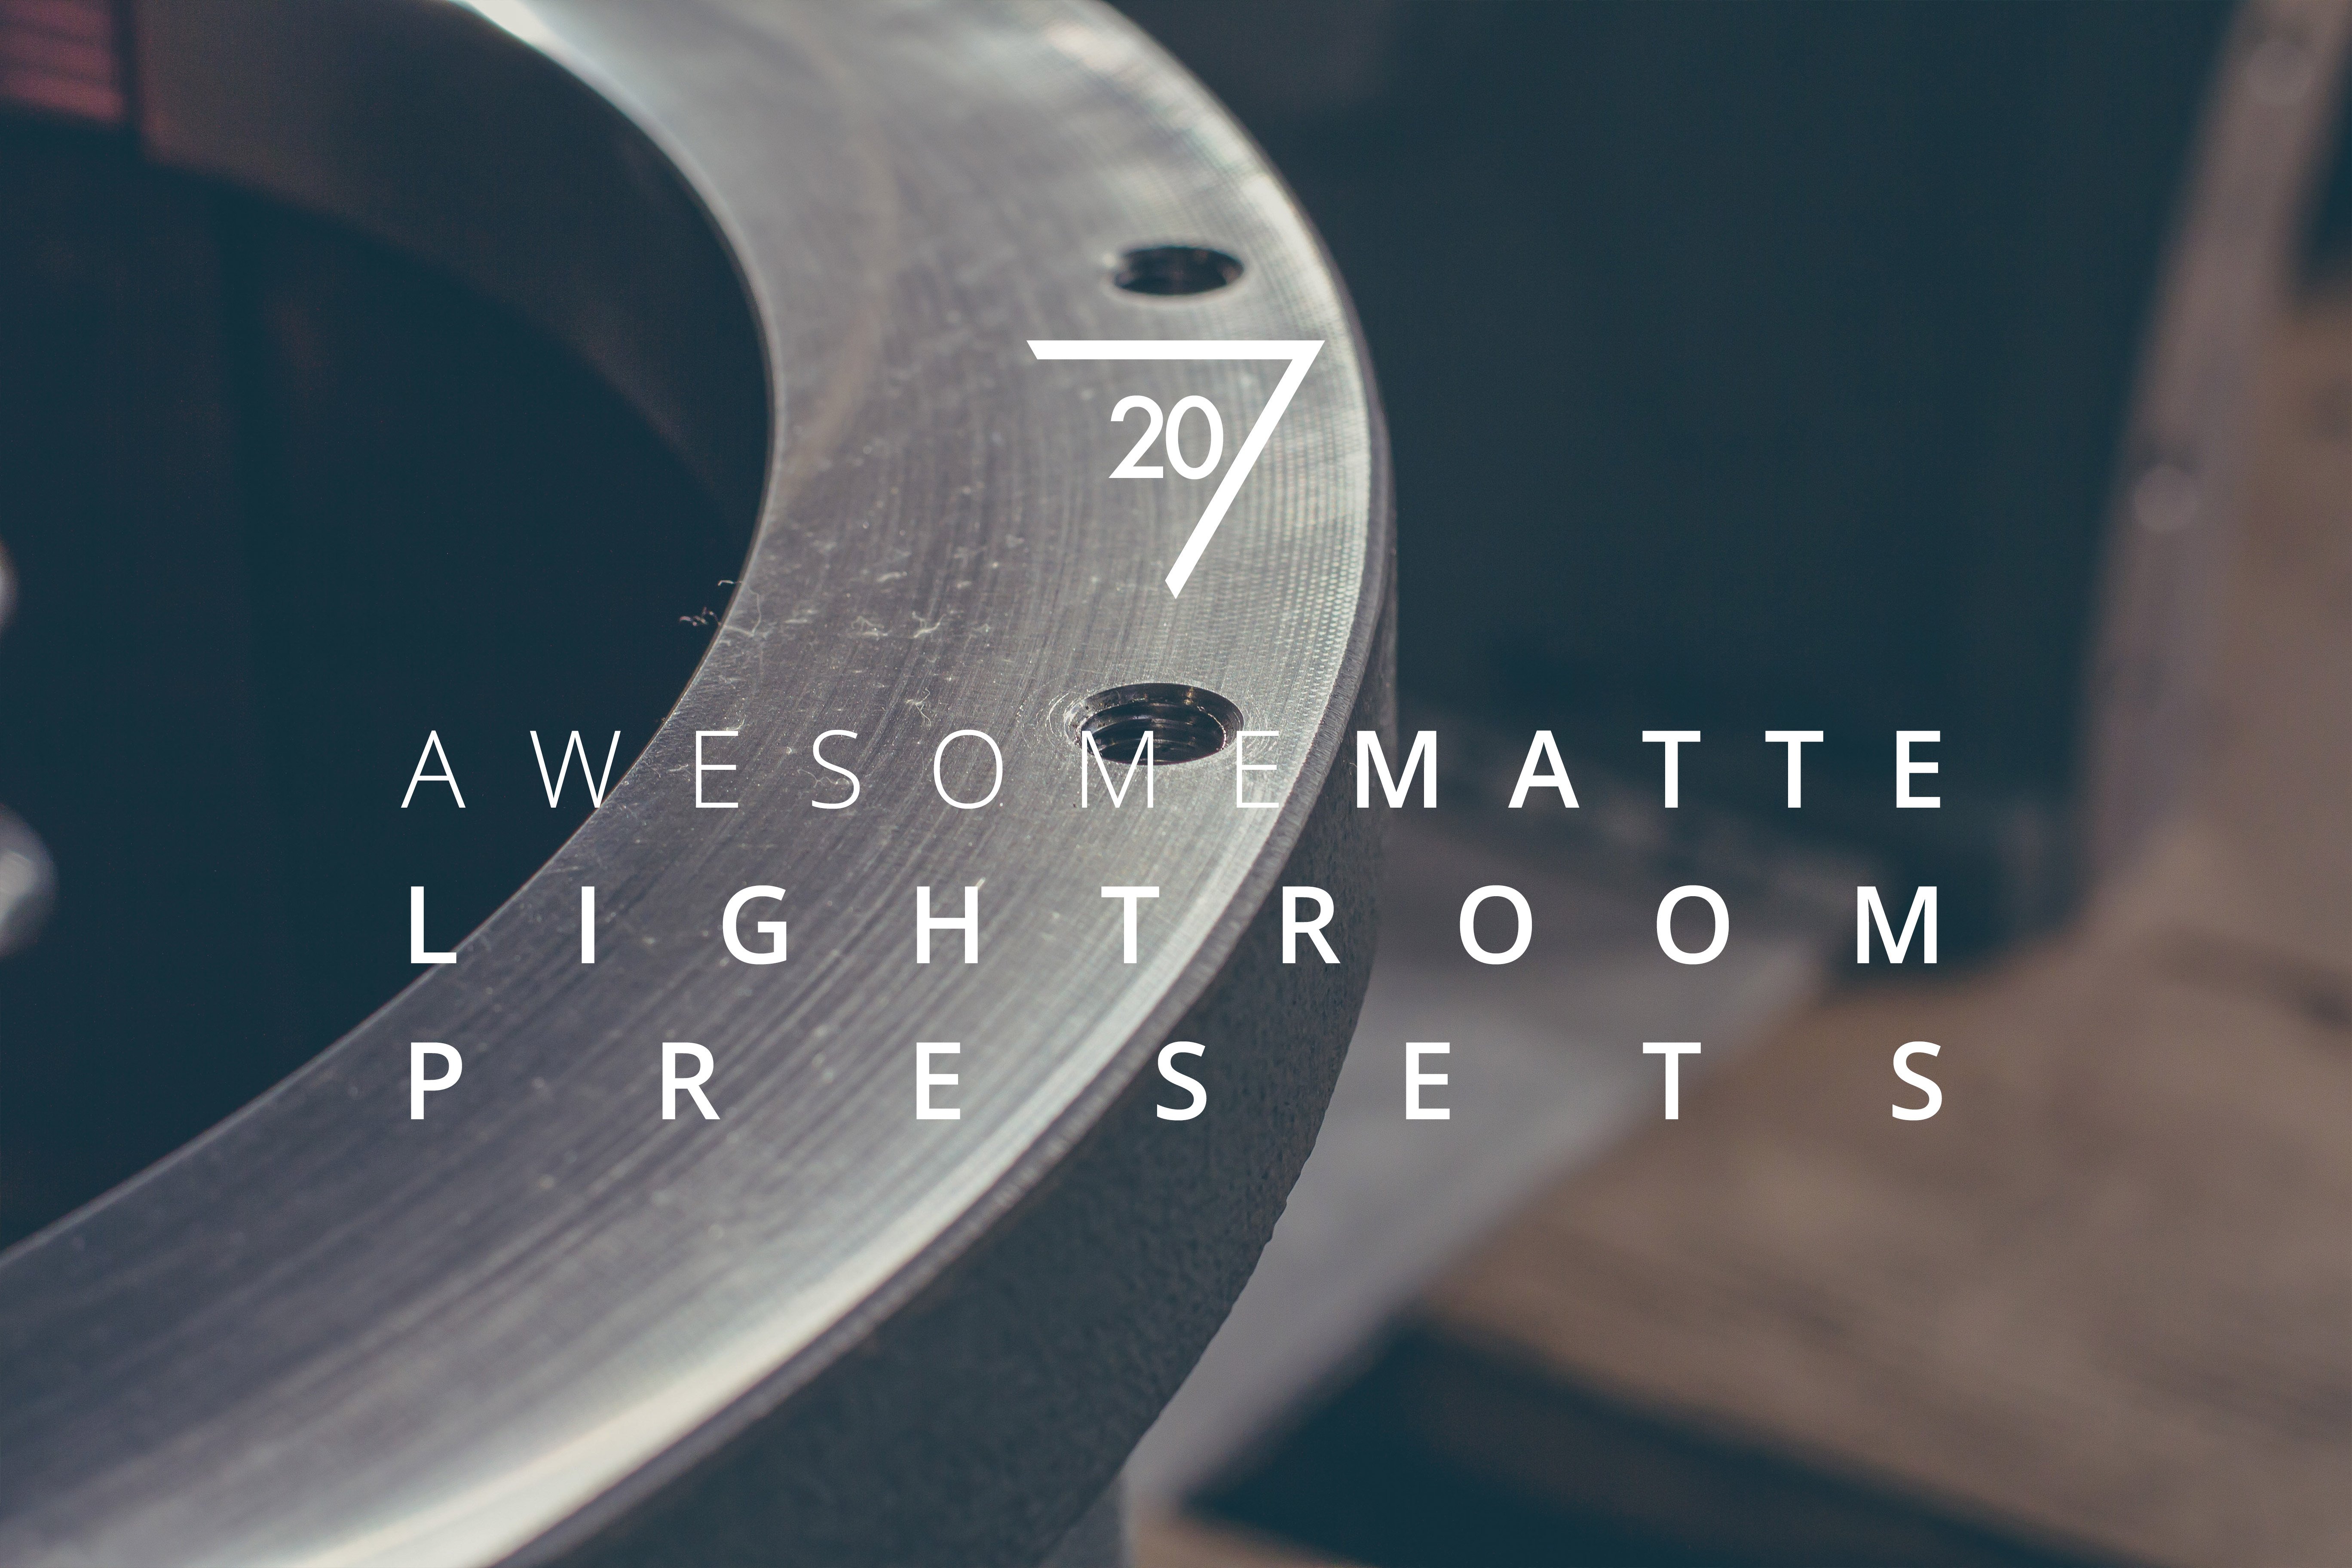 20 Awesome Matte Lightroom Presetscover image.